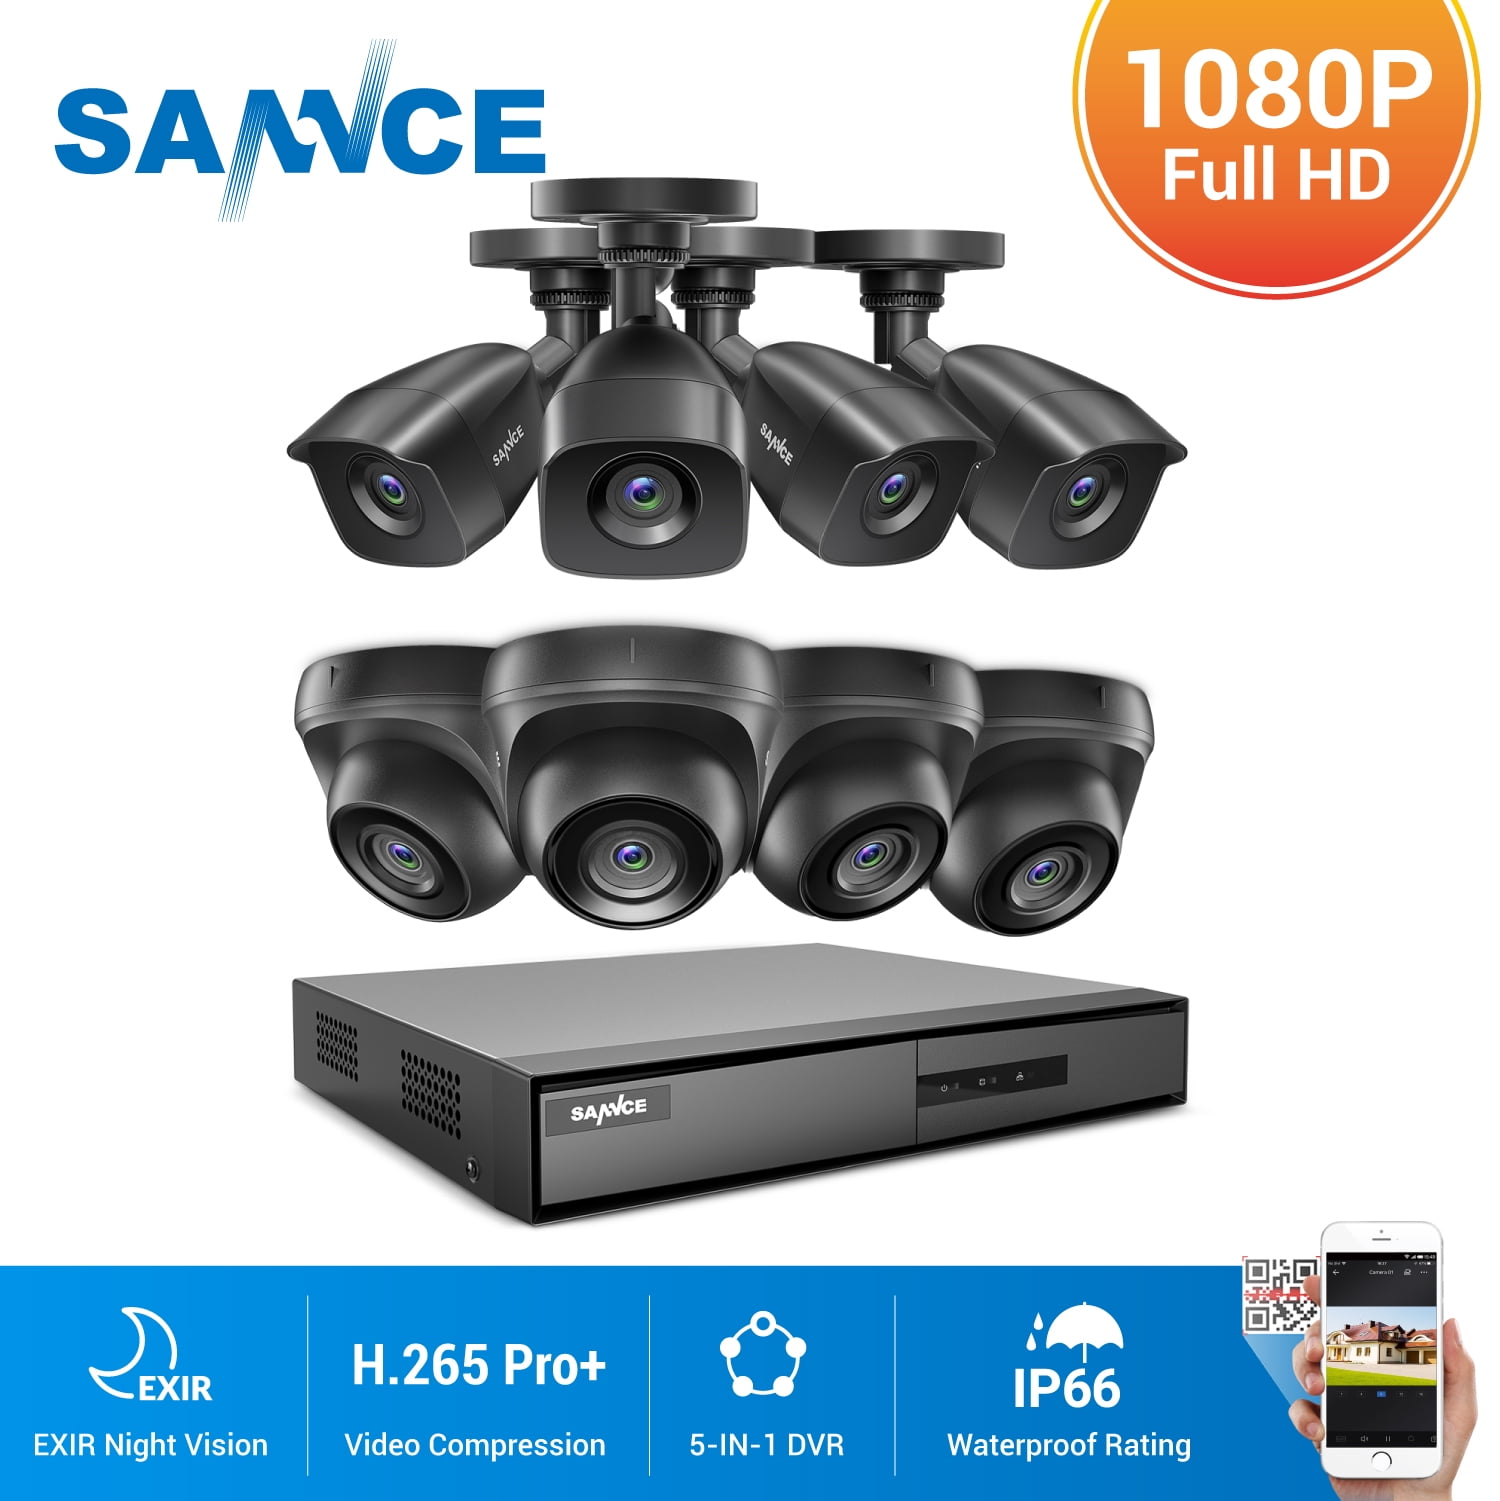 Instant Remote Viewing True HD 1080p No Hard Drive SANSCO CCTV Security System 8 Channel 1080p Surveillance DVR Standalone Recorder Smart Motion Detection & Push Alerts 